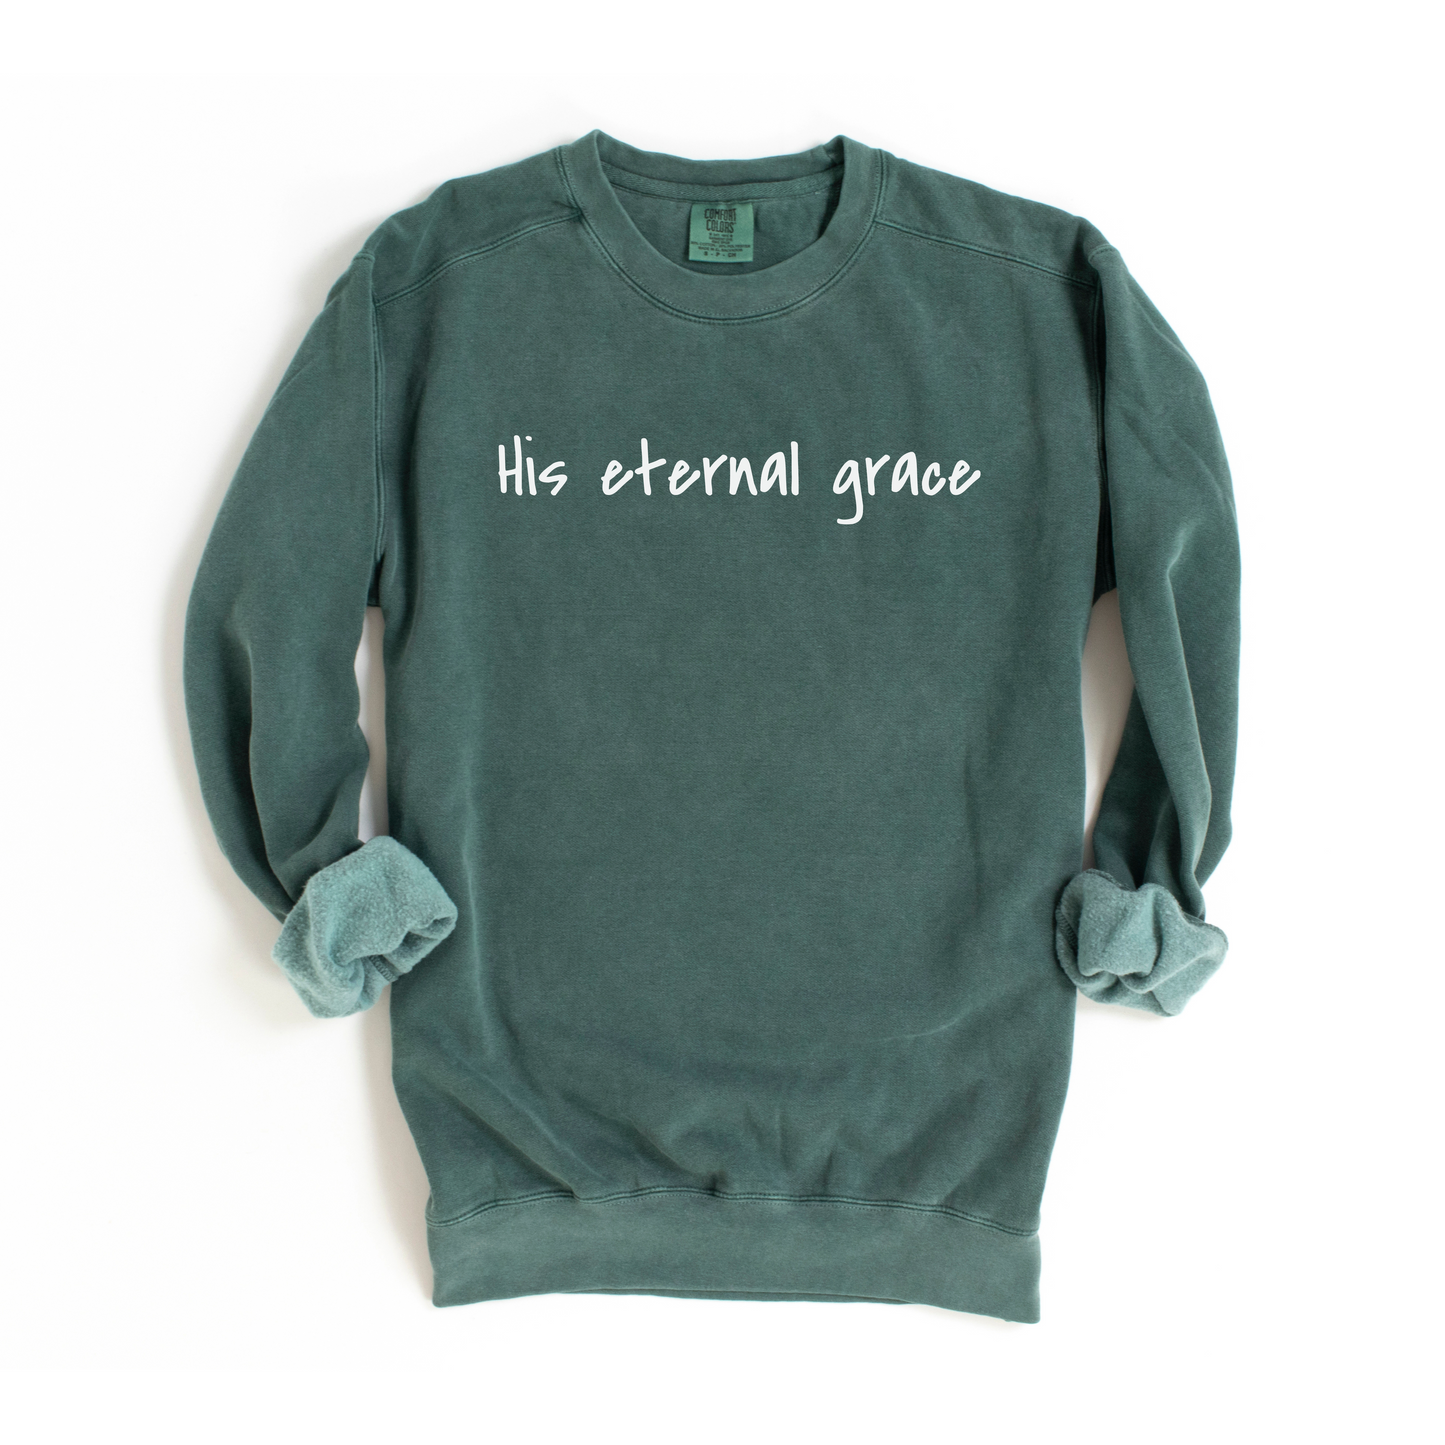 Eternal Purpose Crewneck Sweatshirt